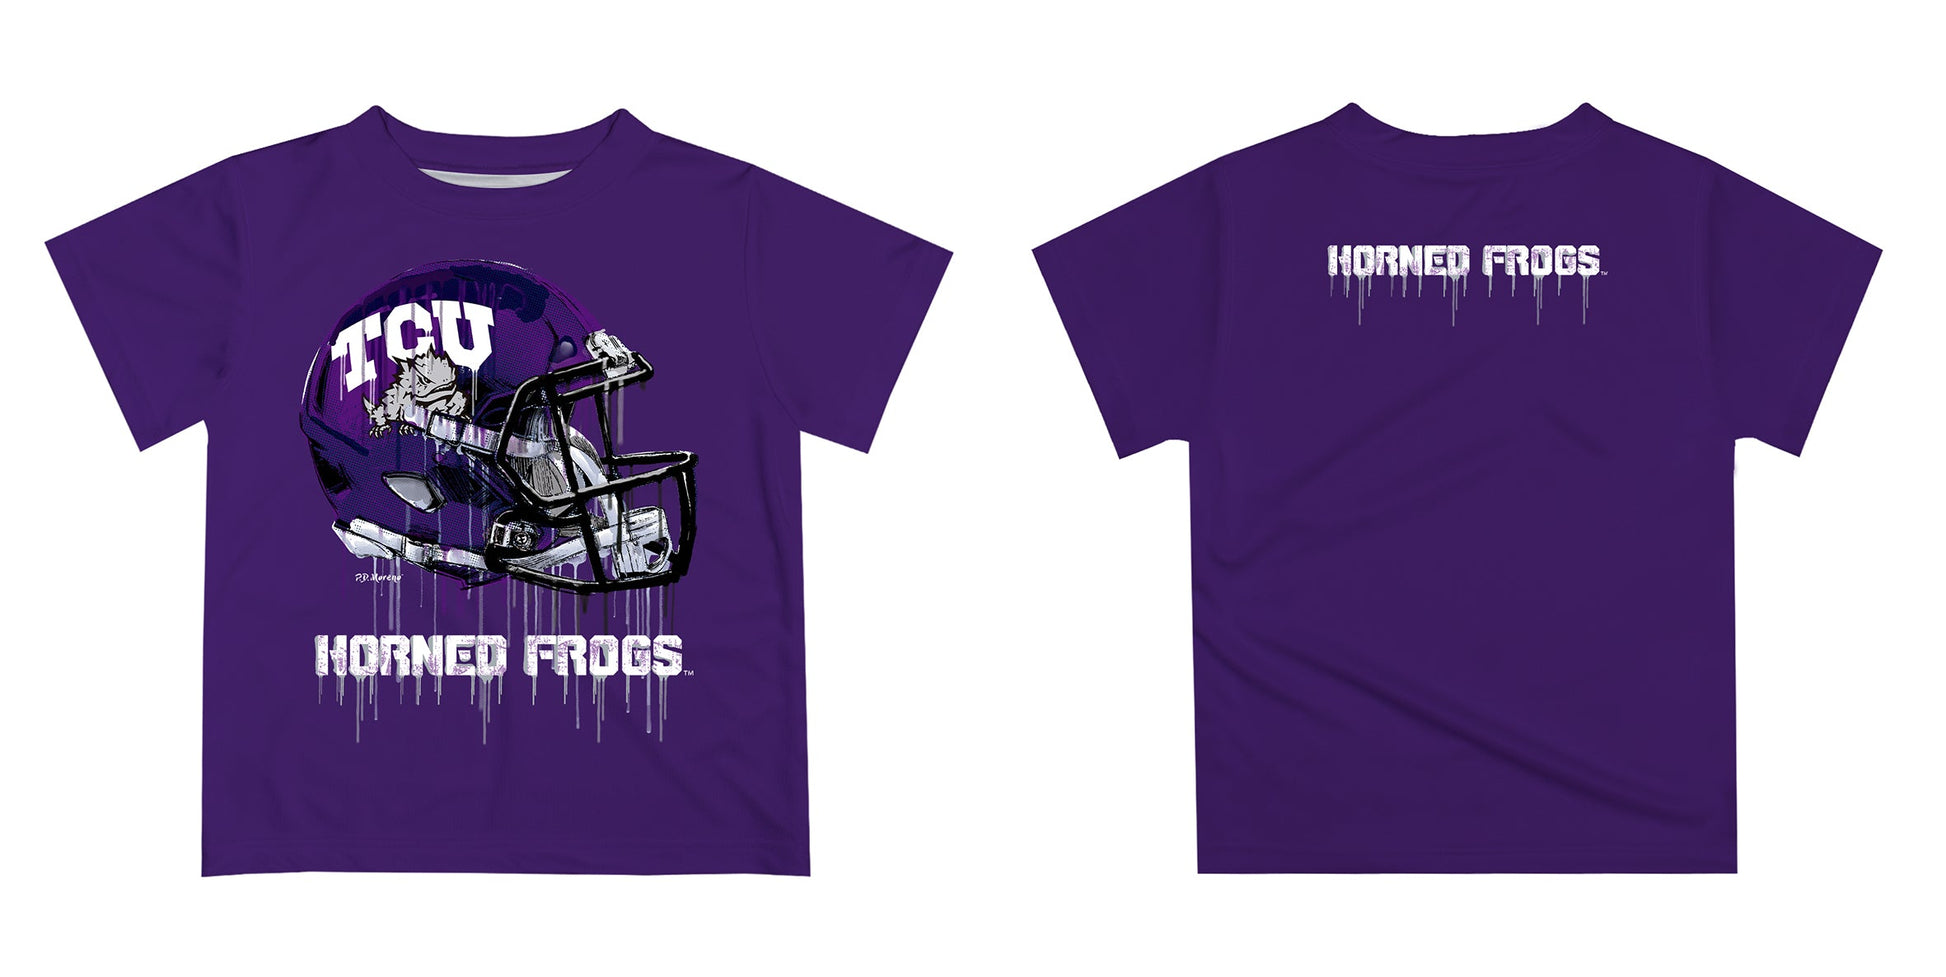 TCU Horned Frogs Original Dripping Football Helmet Purple T-Shirt by Vive La Fete